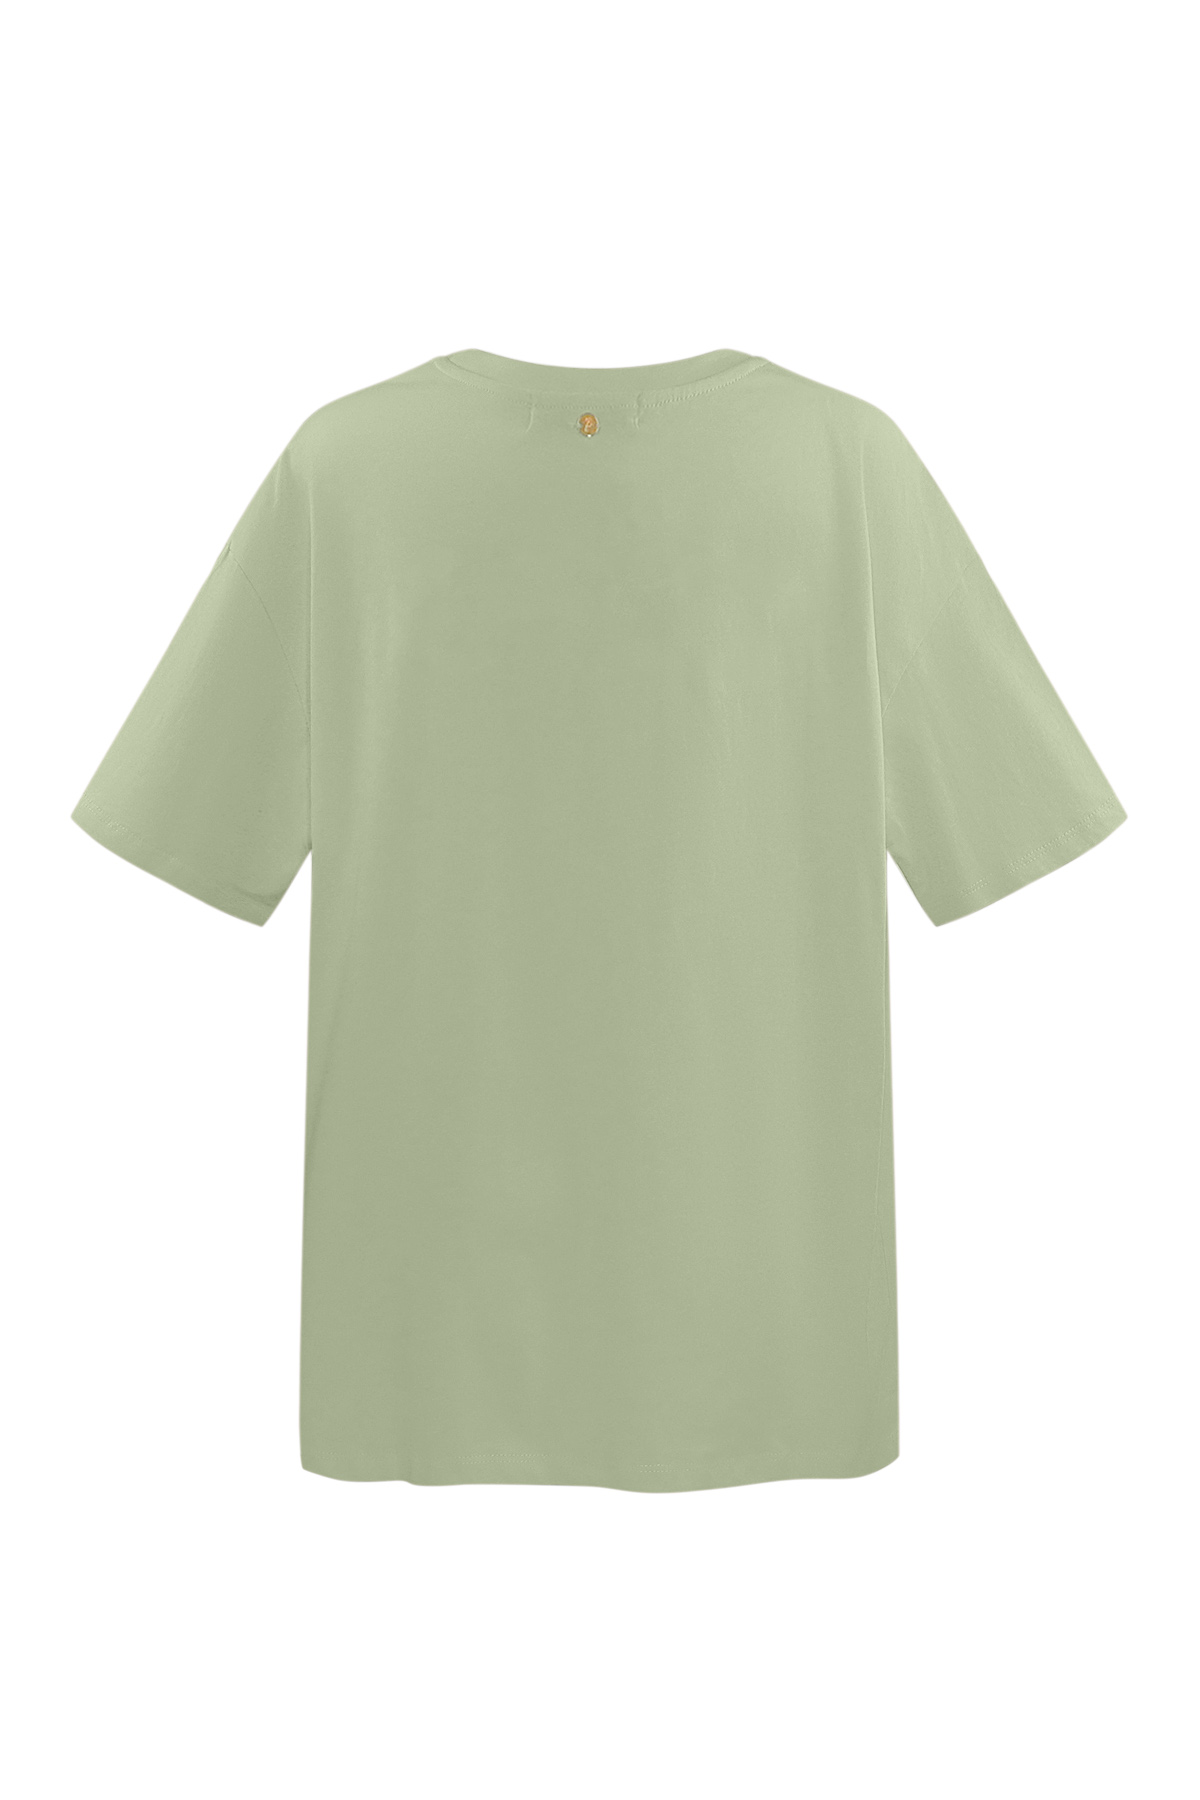 Tişört ma perle - yeşil Resim7